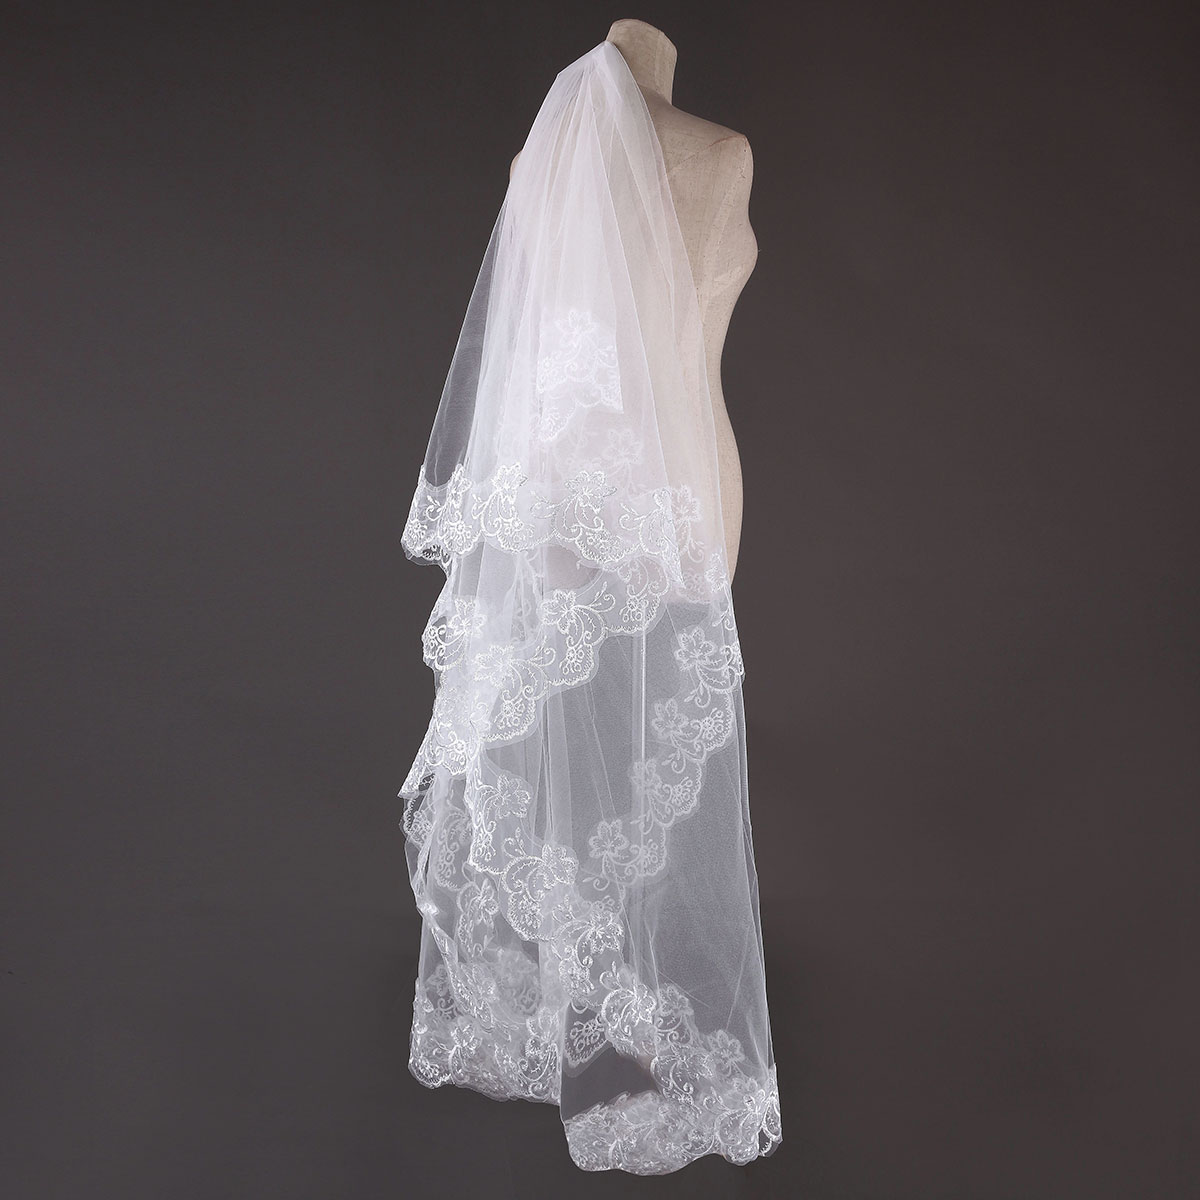 3M-Bride-White-Ivory-Elegant-Cathedral-Length-Wedding-Bridal-Veil-With-Lace-Edge-1025642